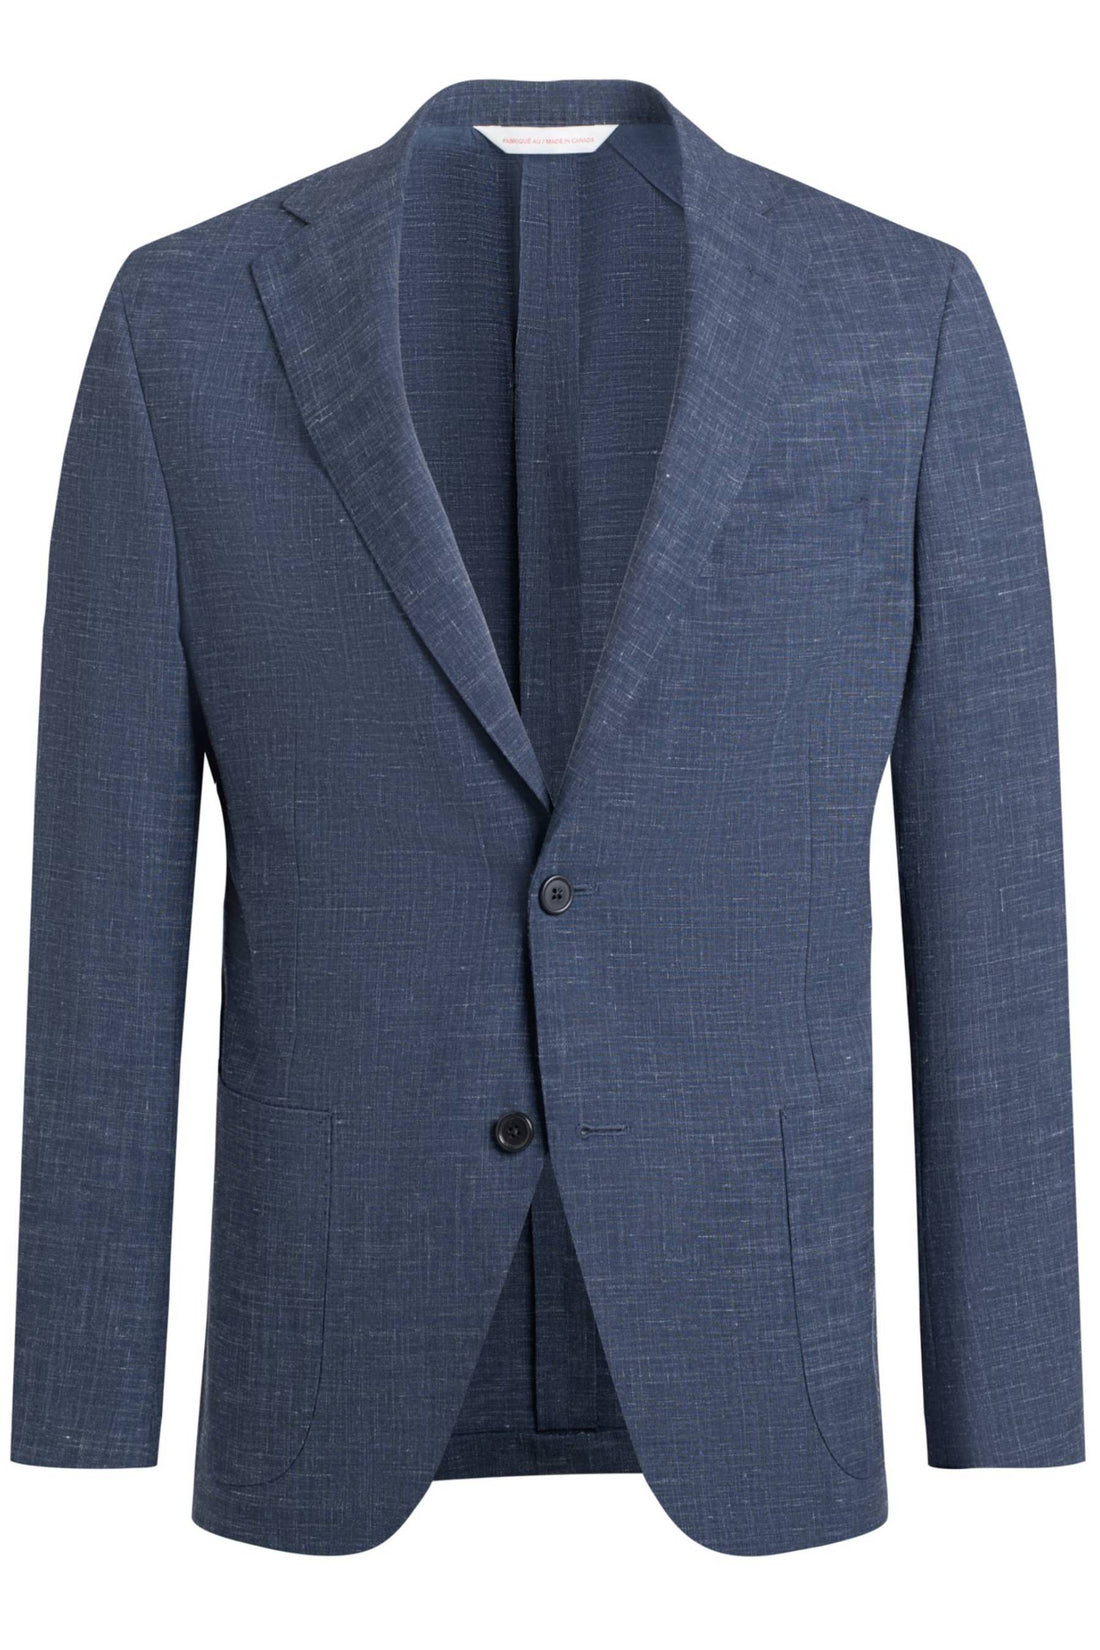 Samuelsohn Blue Wool Linen Stretch Suit Front Jacket